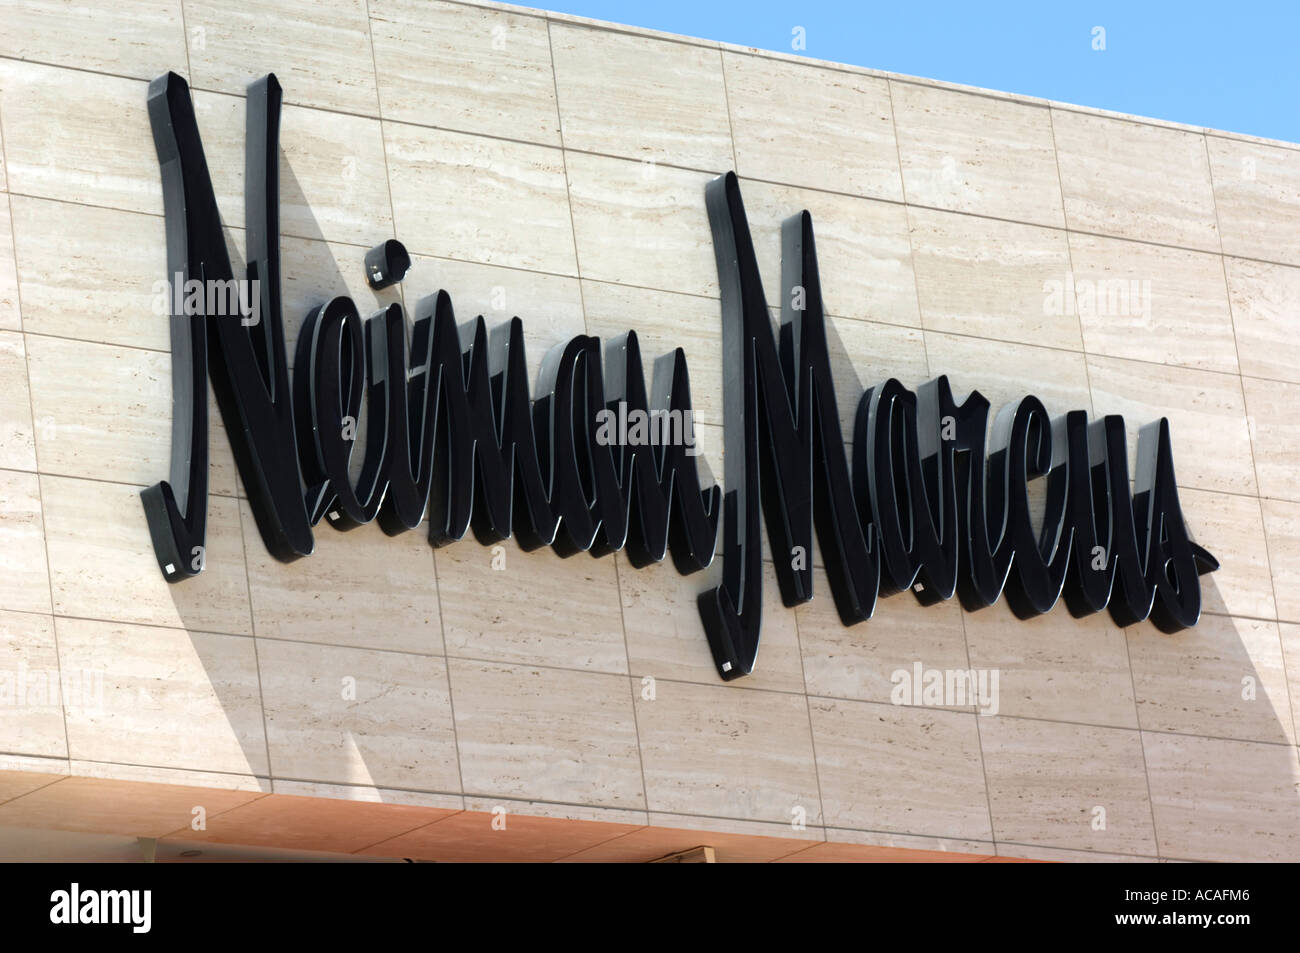 File:Neiman Marcus Las Vegas.jpg - Wikipedia